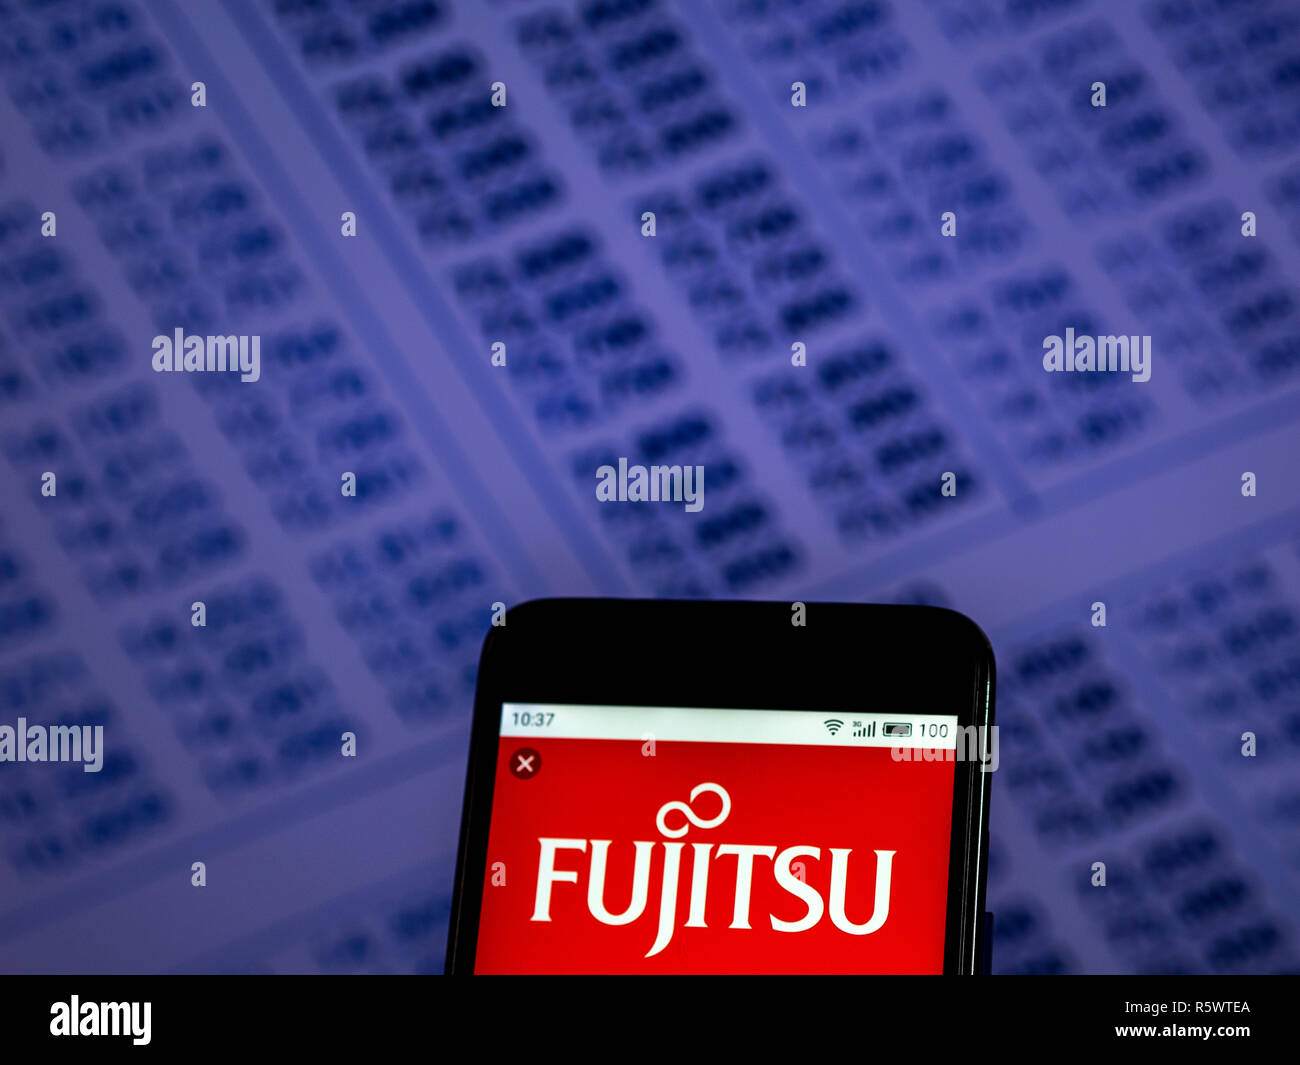 Fujitsu Personal computer equipment company logo seen displayed on smart phone. Stock Photo